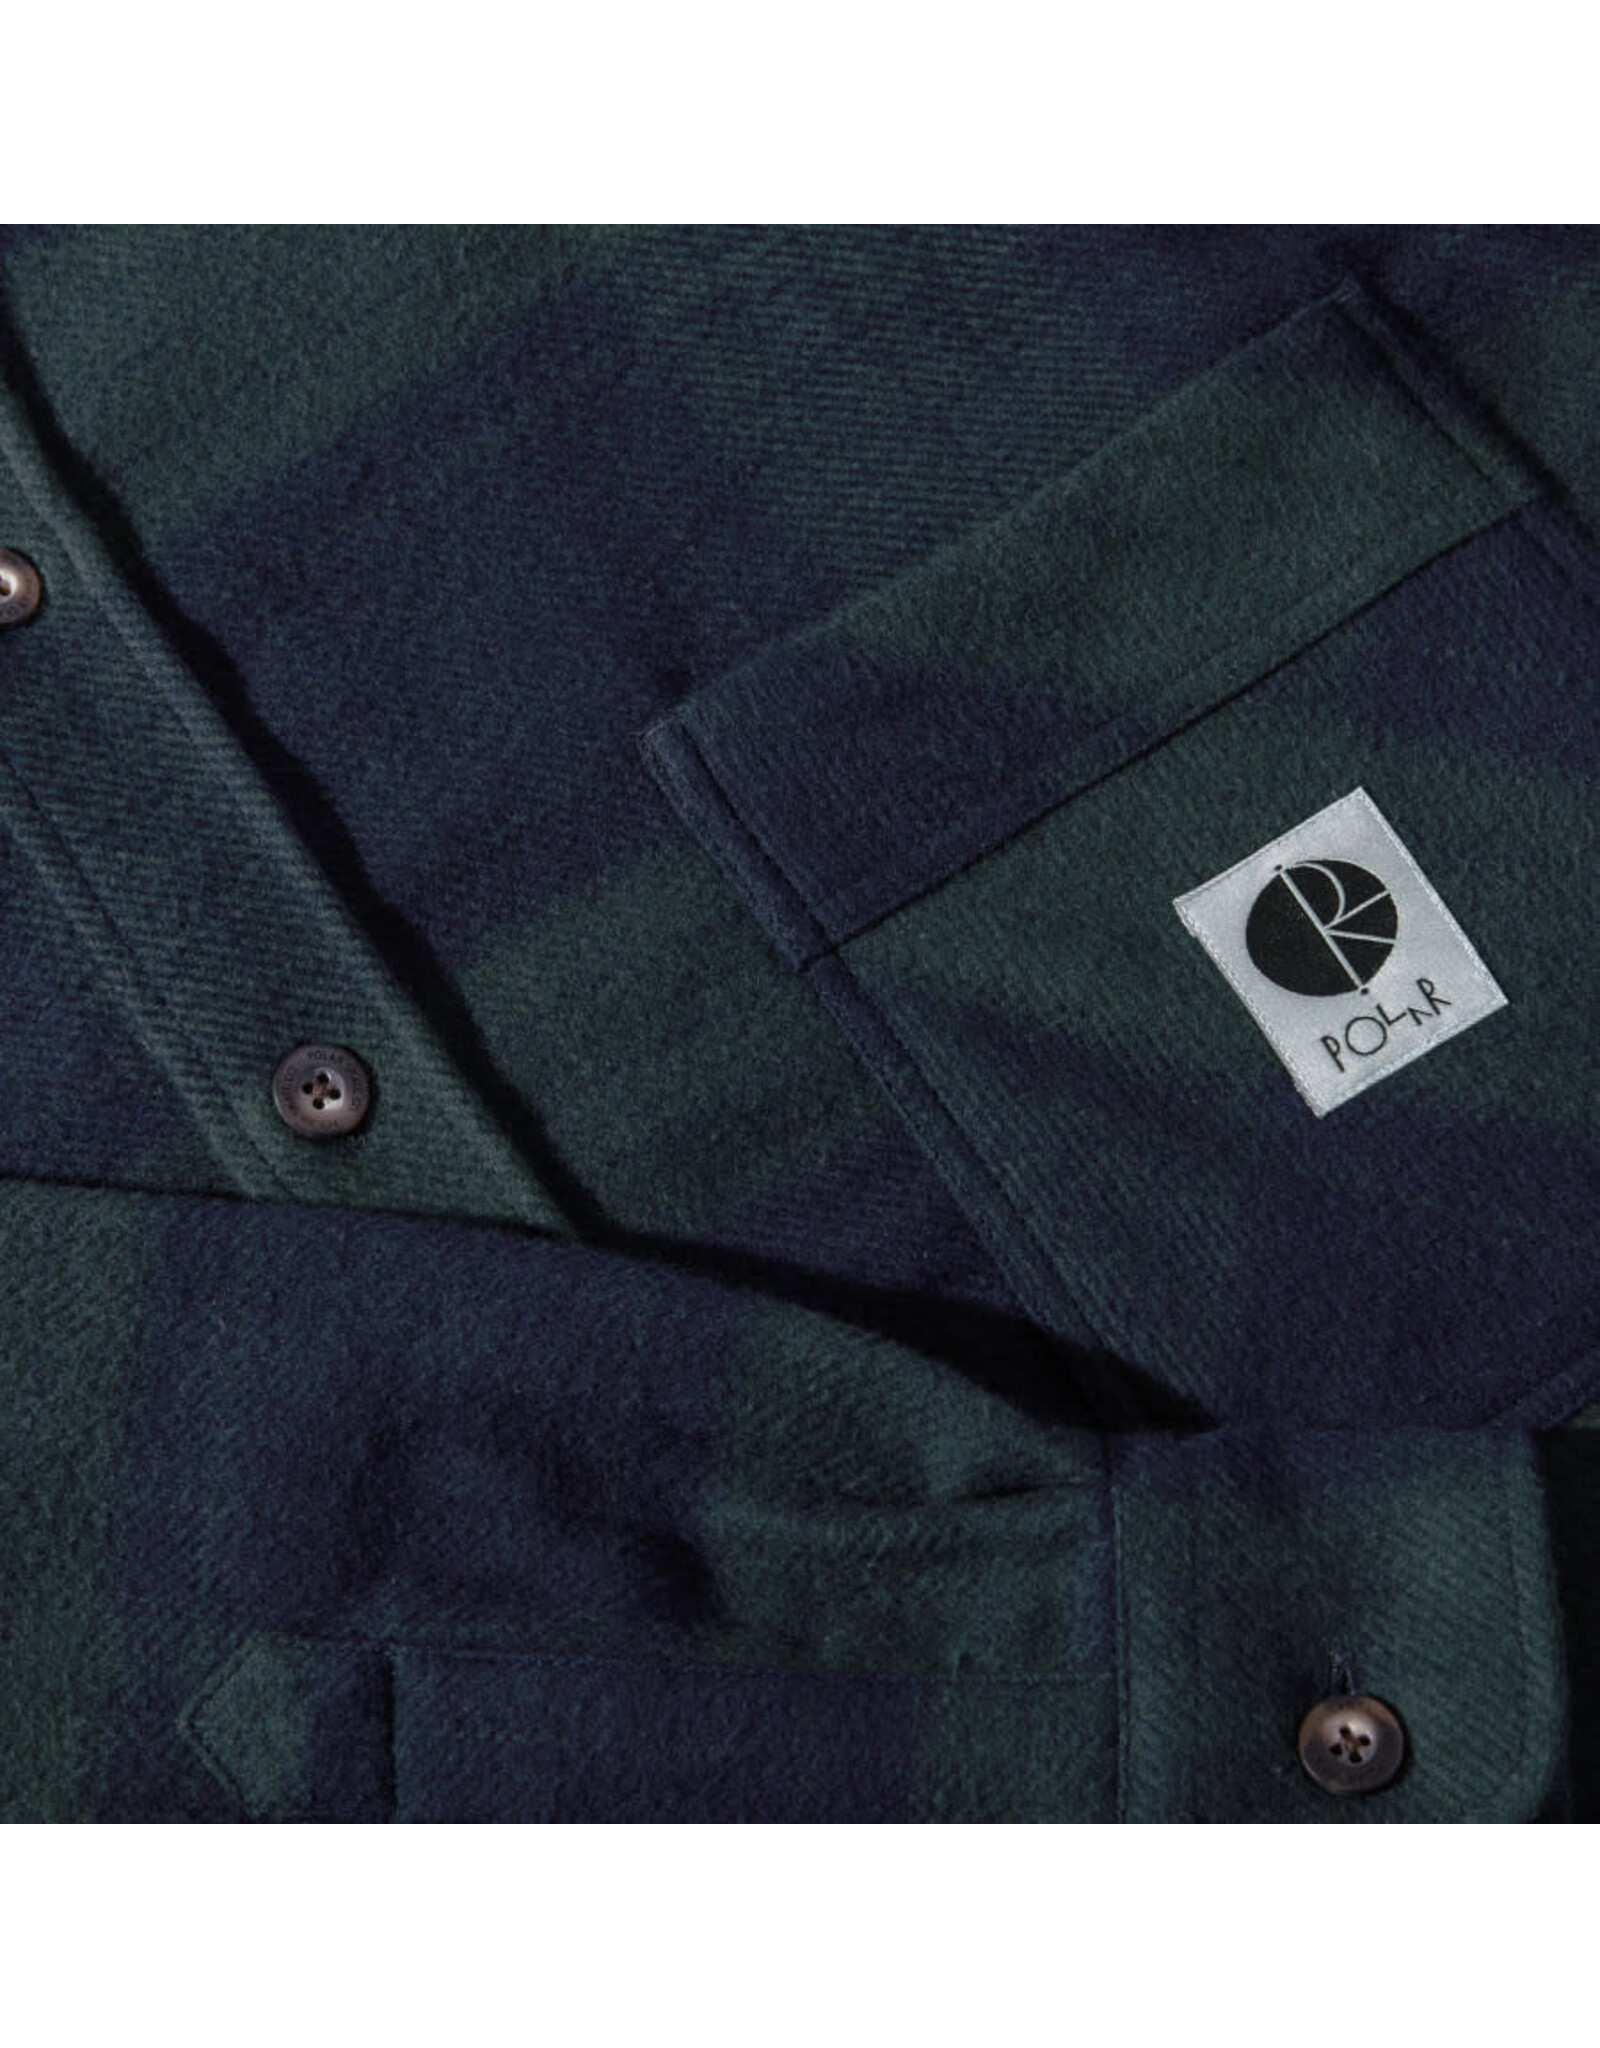 Polar Polar Flannel Mike Button Shirt L/S (Navy/Teal)